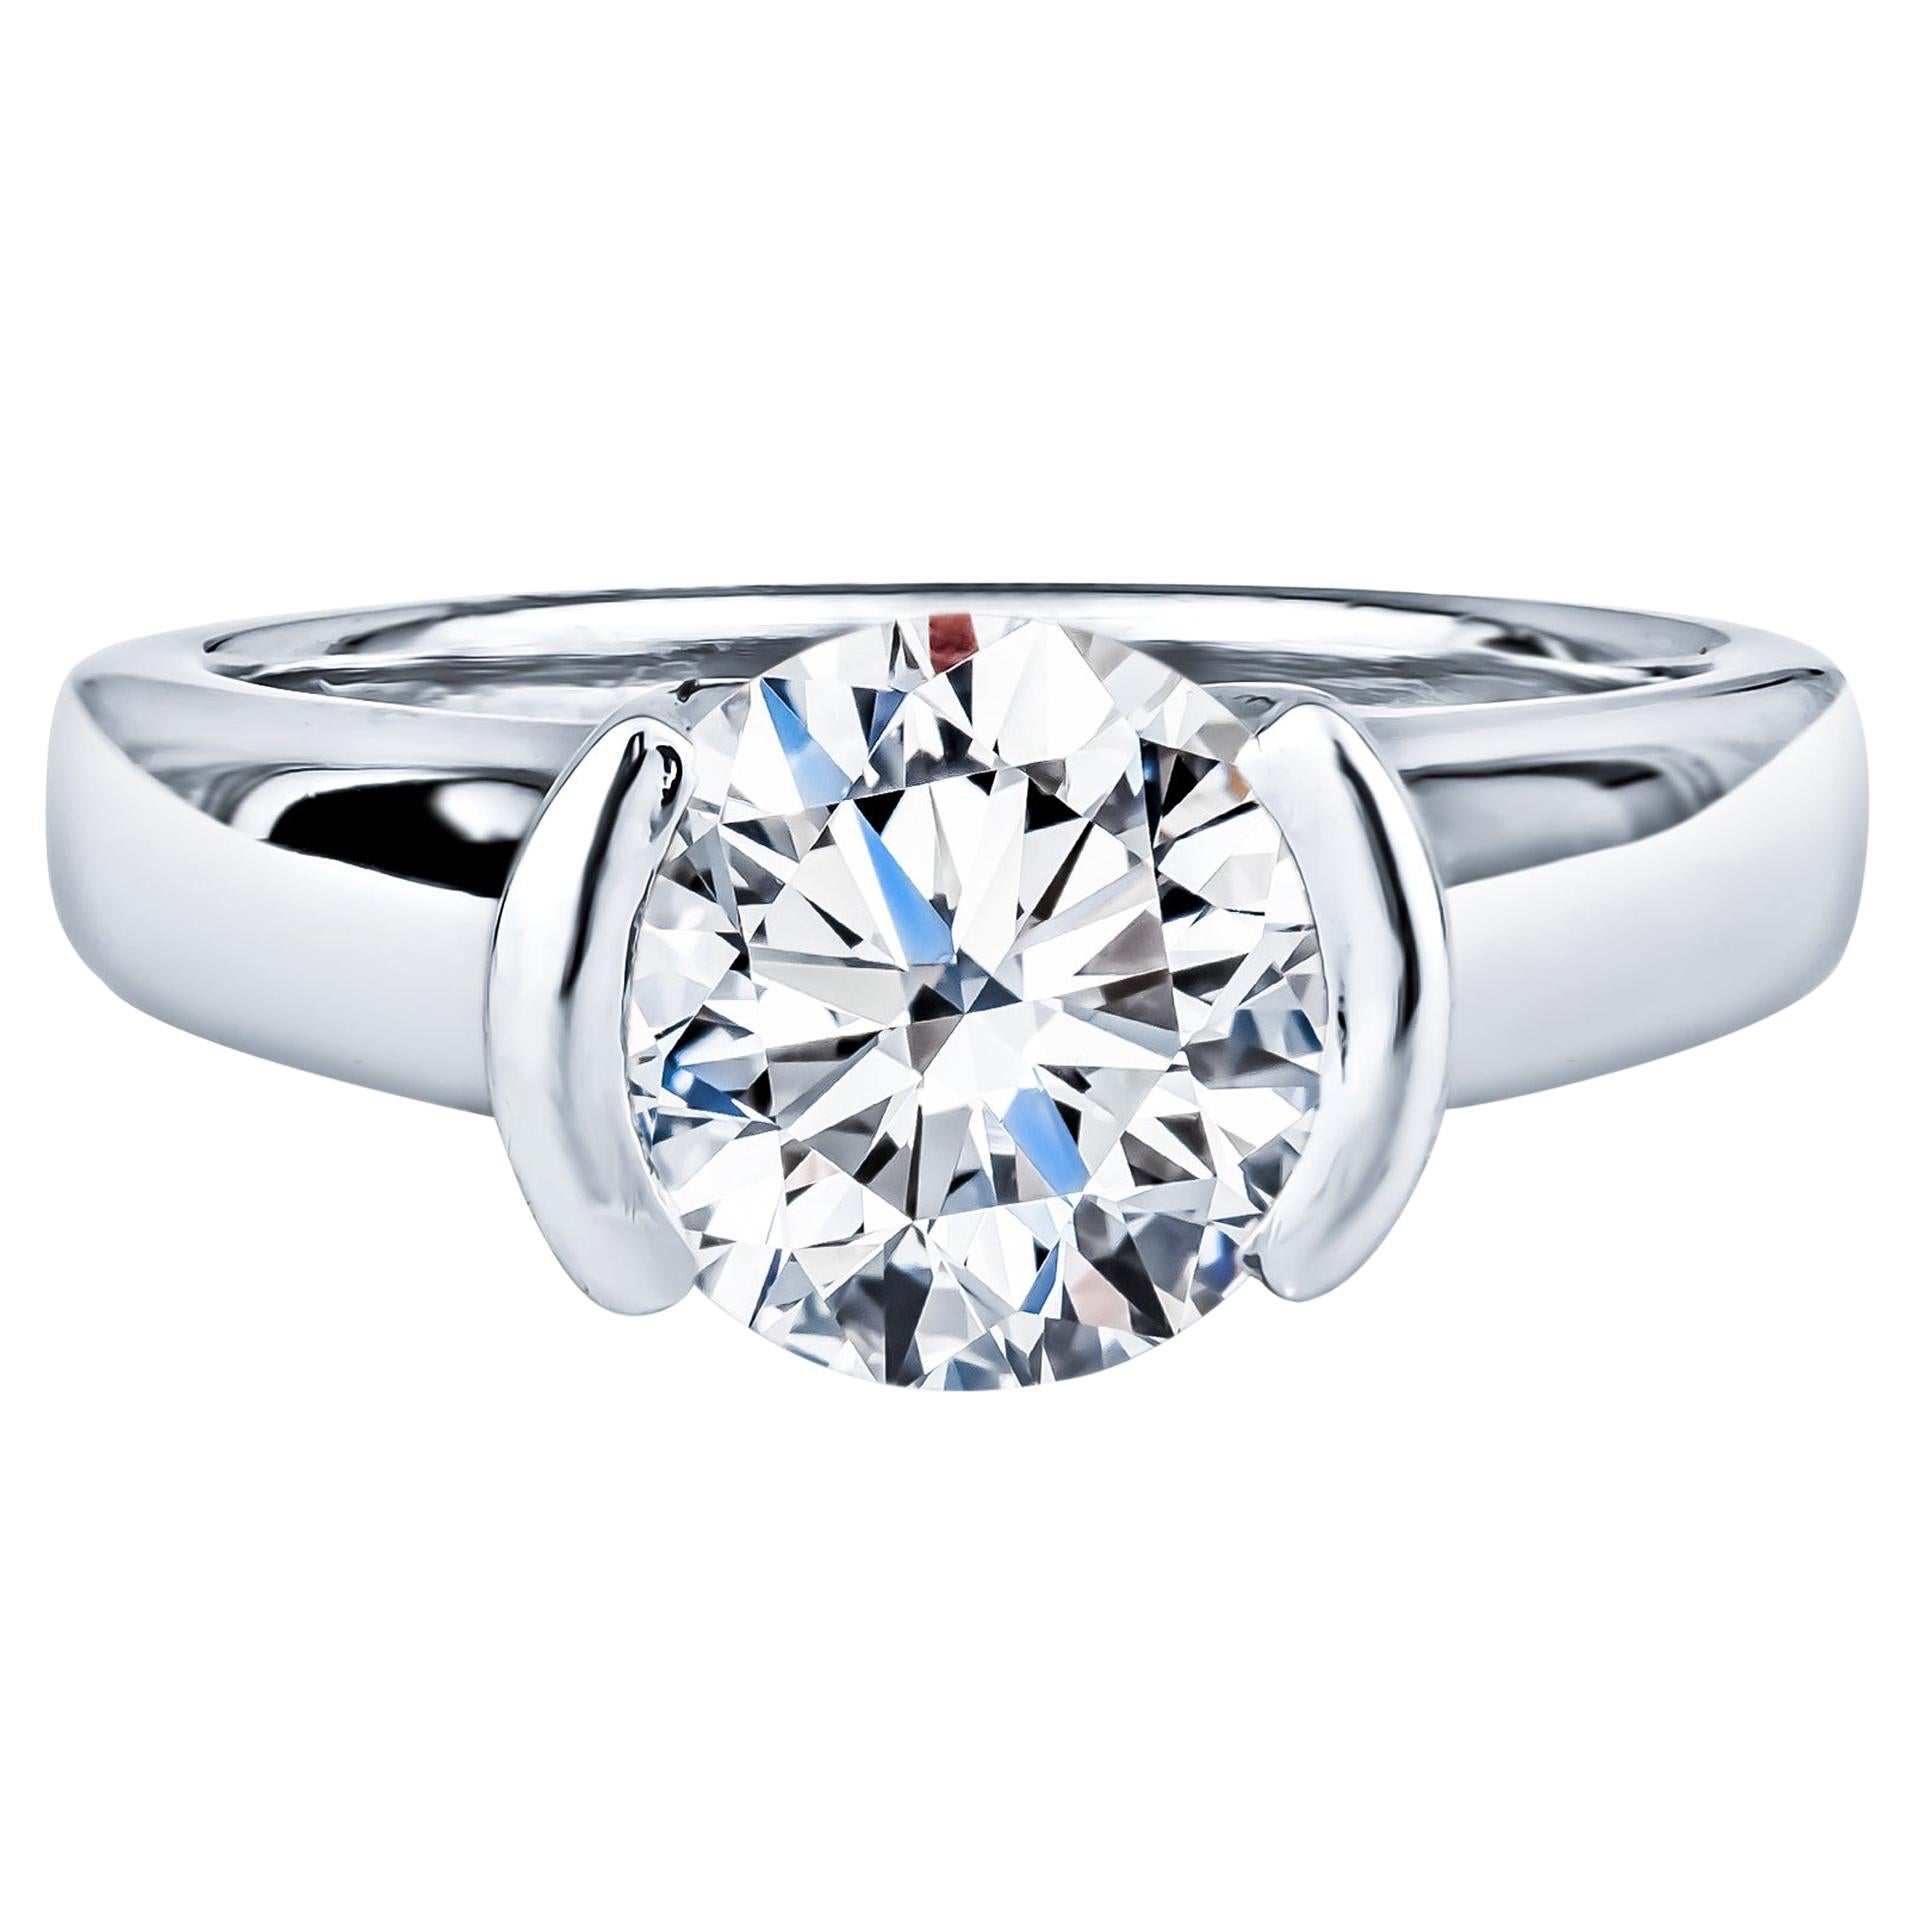 Movado 2.08 Carat Round Brilliant Diamond Ring, GIA Certified, Platinum